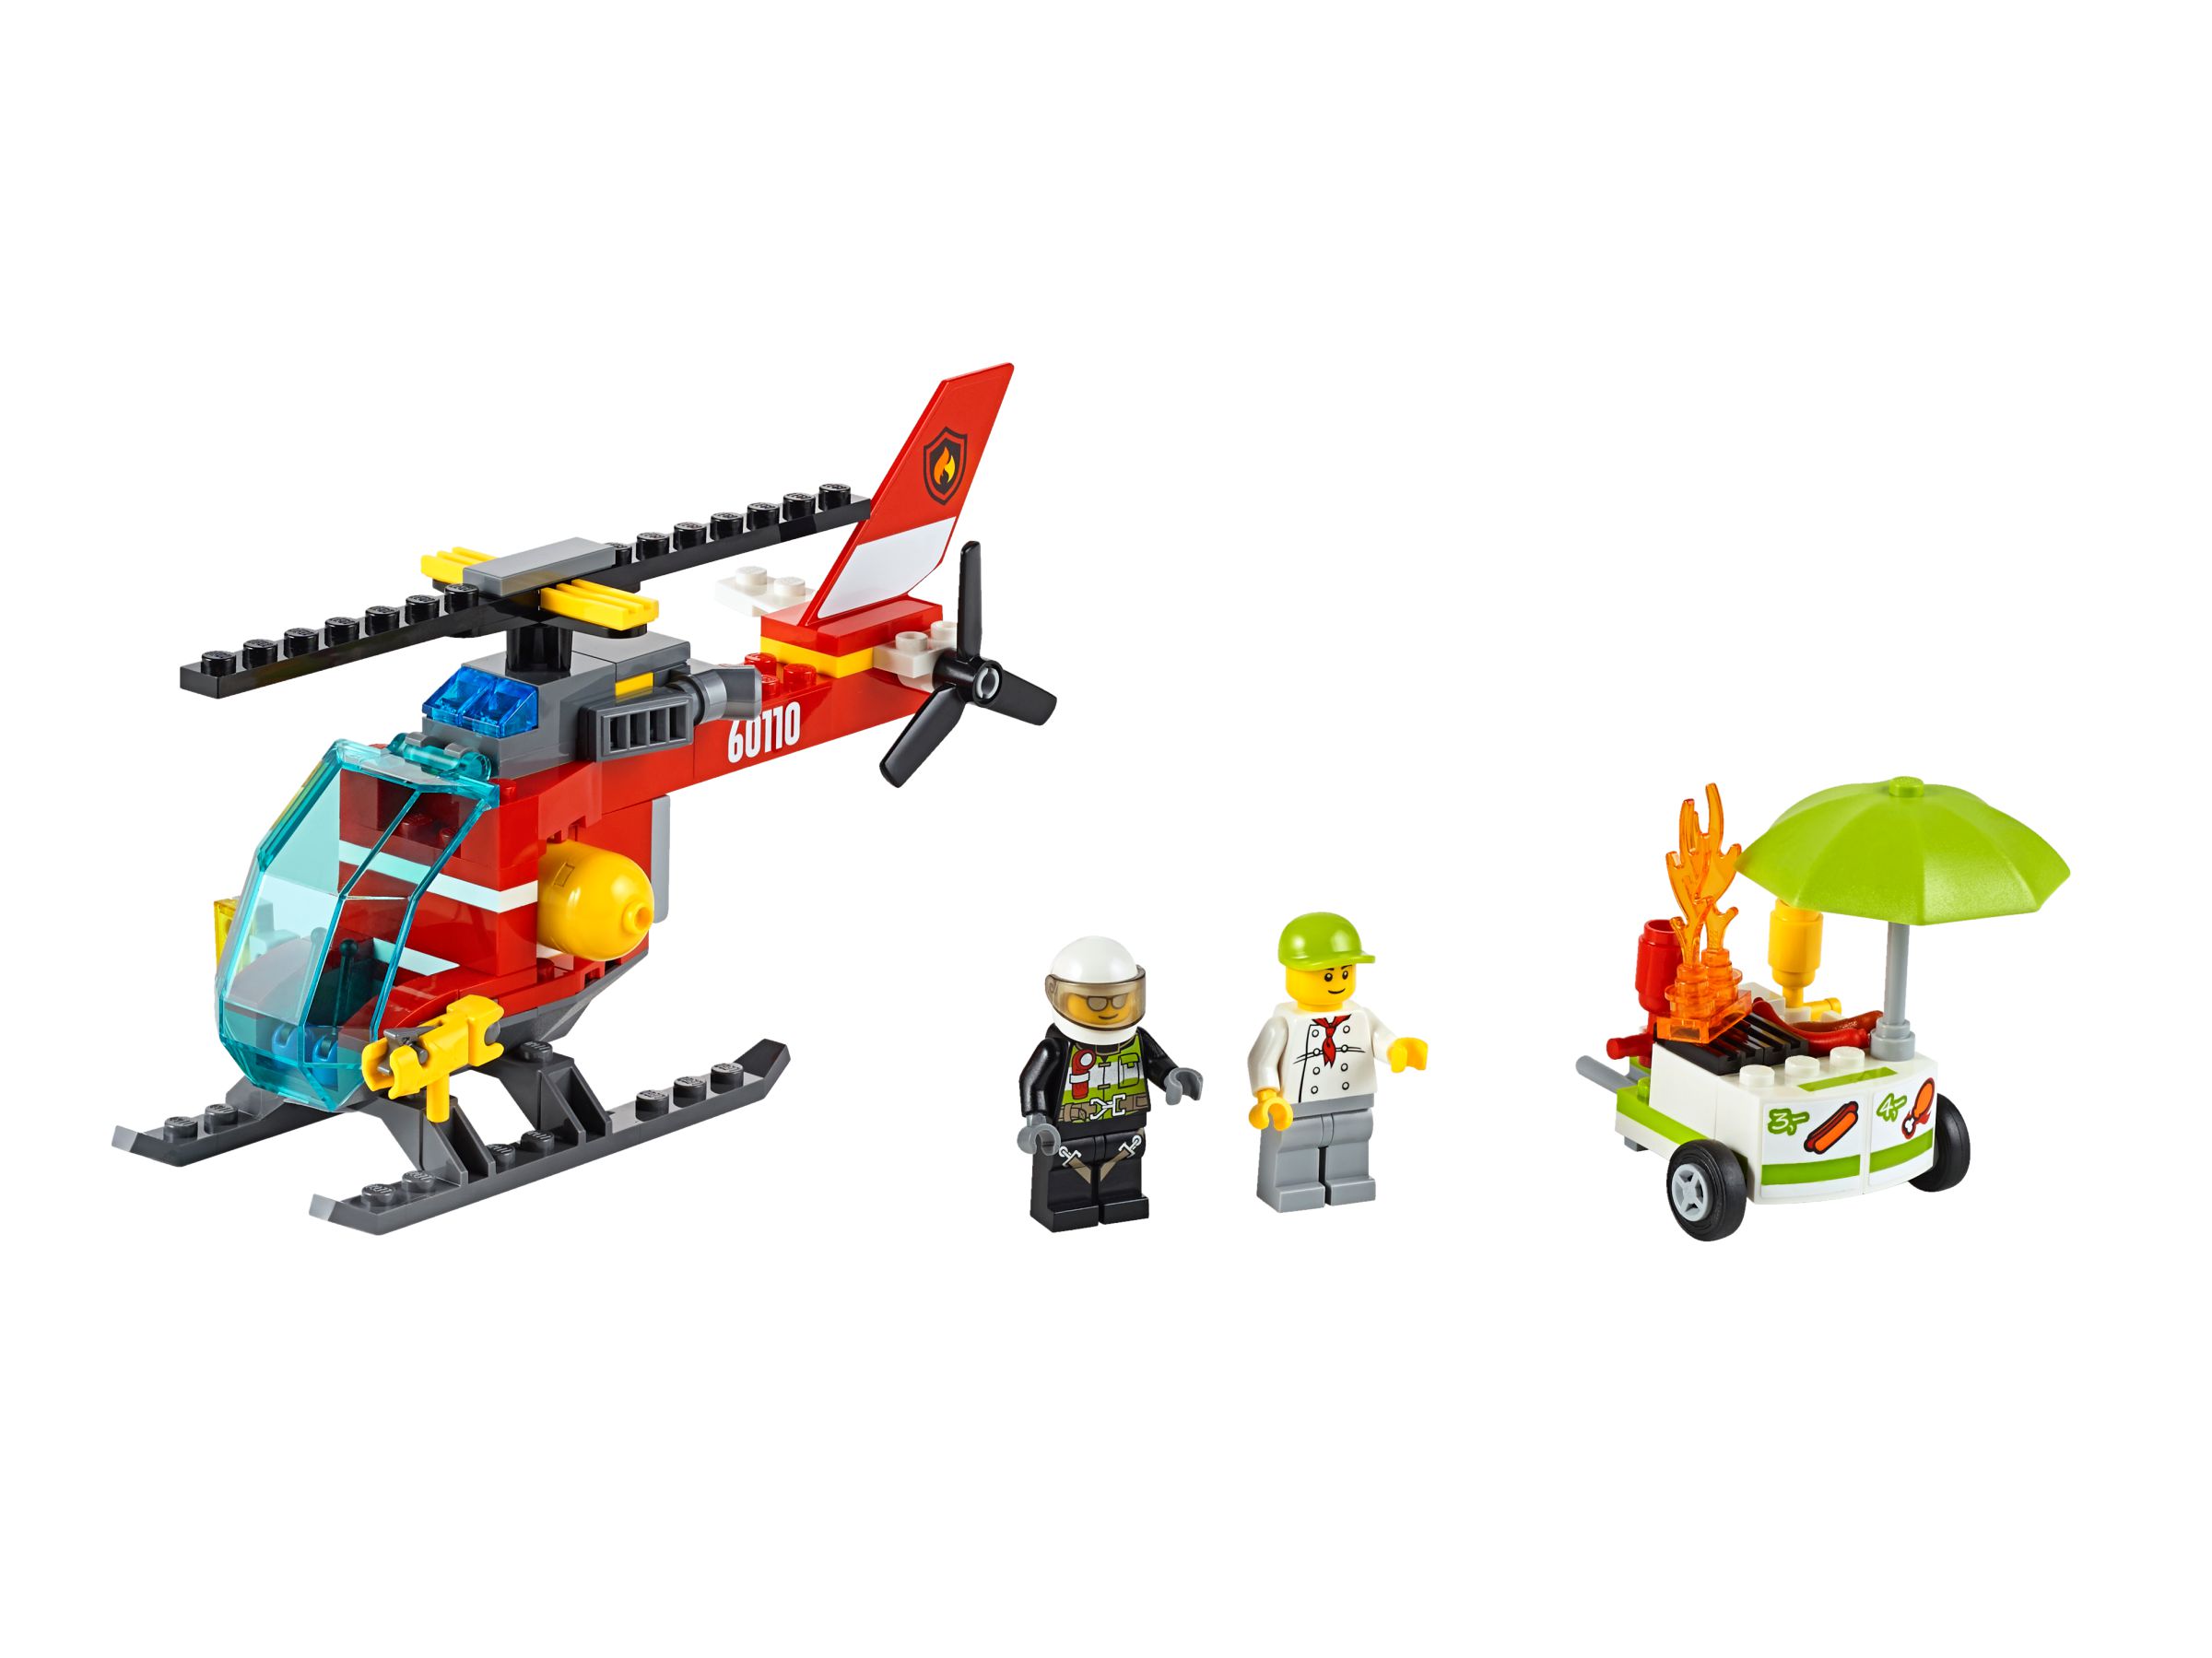 LEGO City 60110 Große Feuerwehrstation LEGO_60110_alt12.jpg